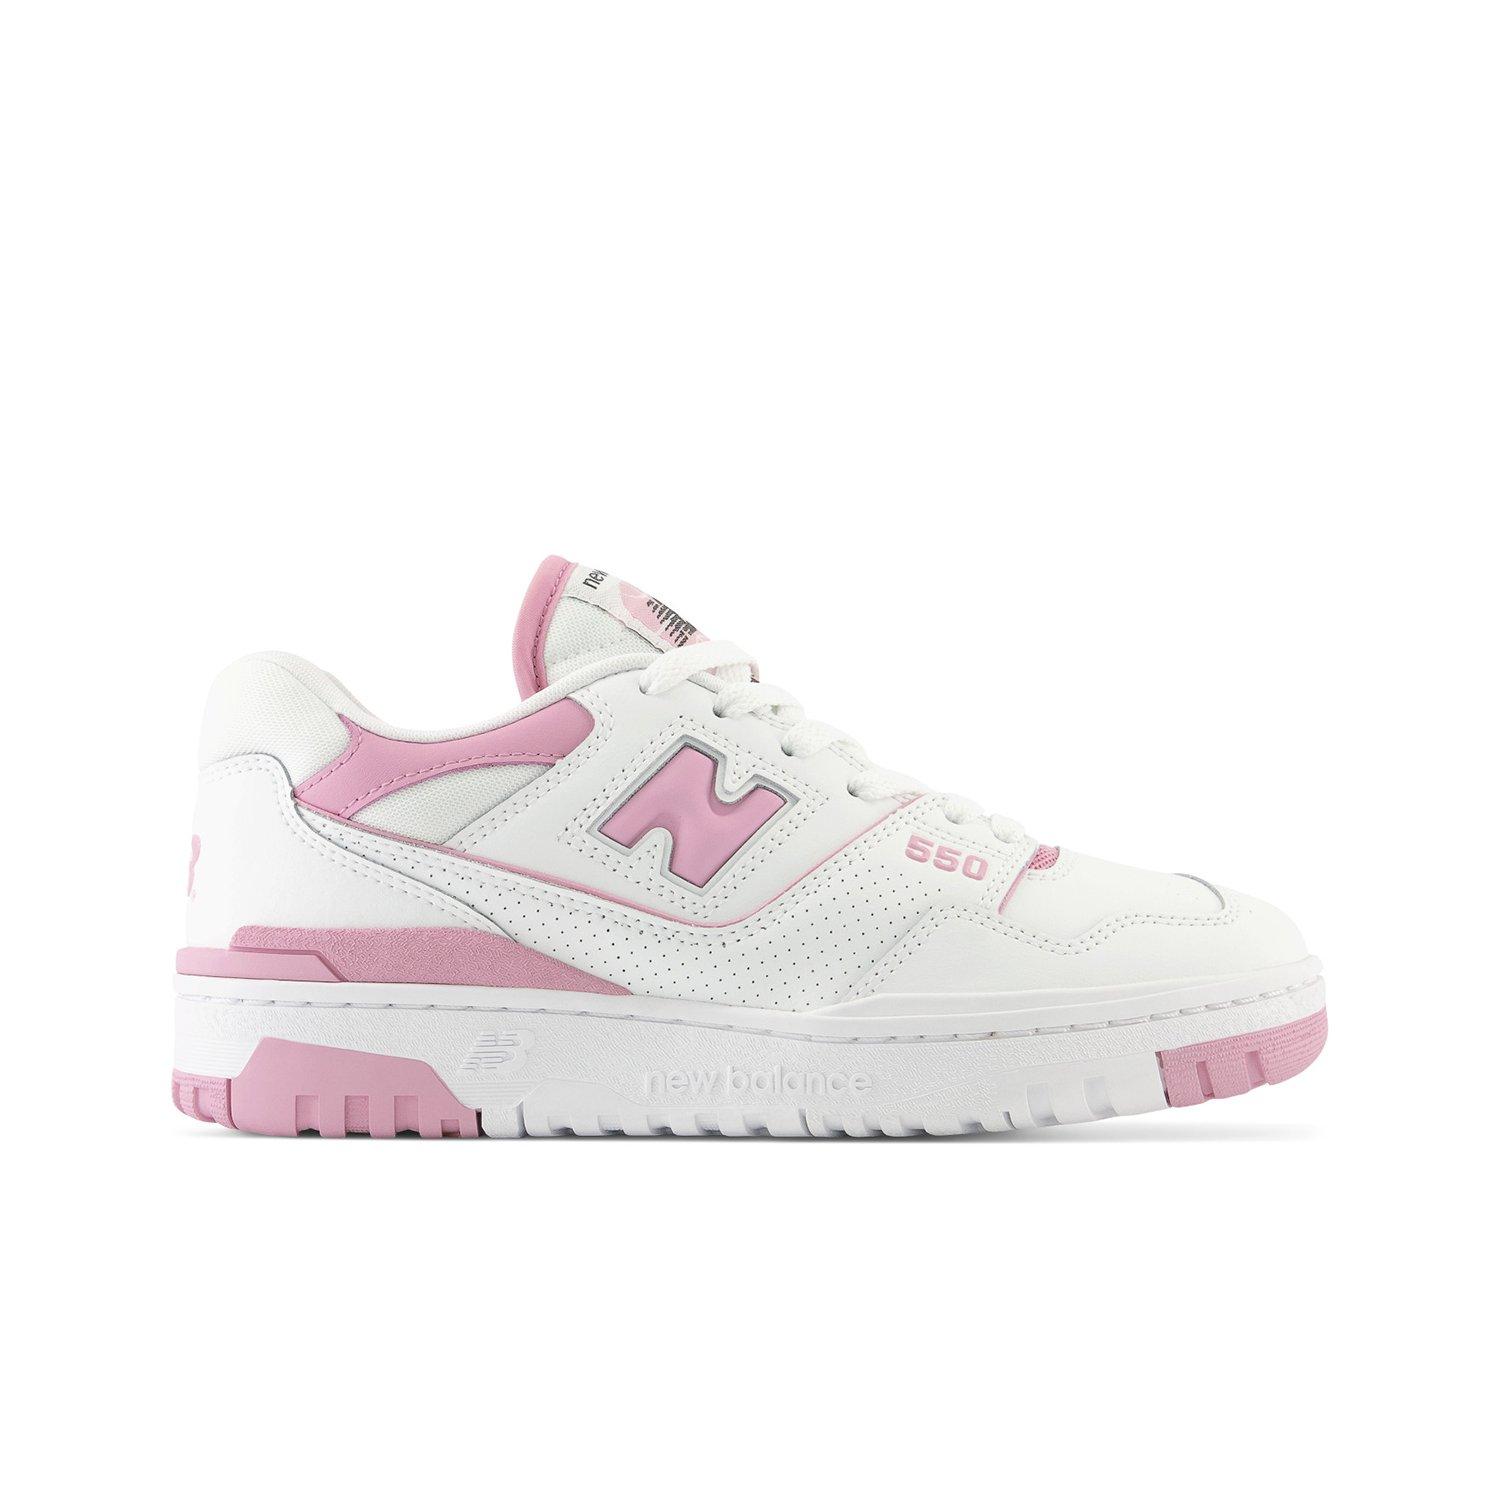 Fotoelektrisch Mordrin omvang New Balance 550 "White/Pink" Women's Shoe